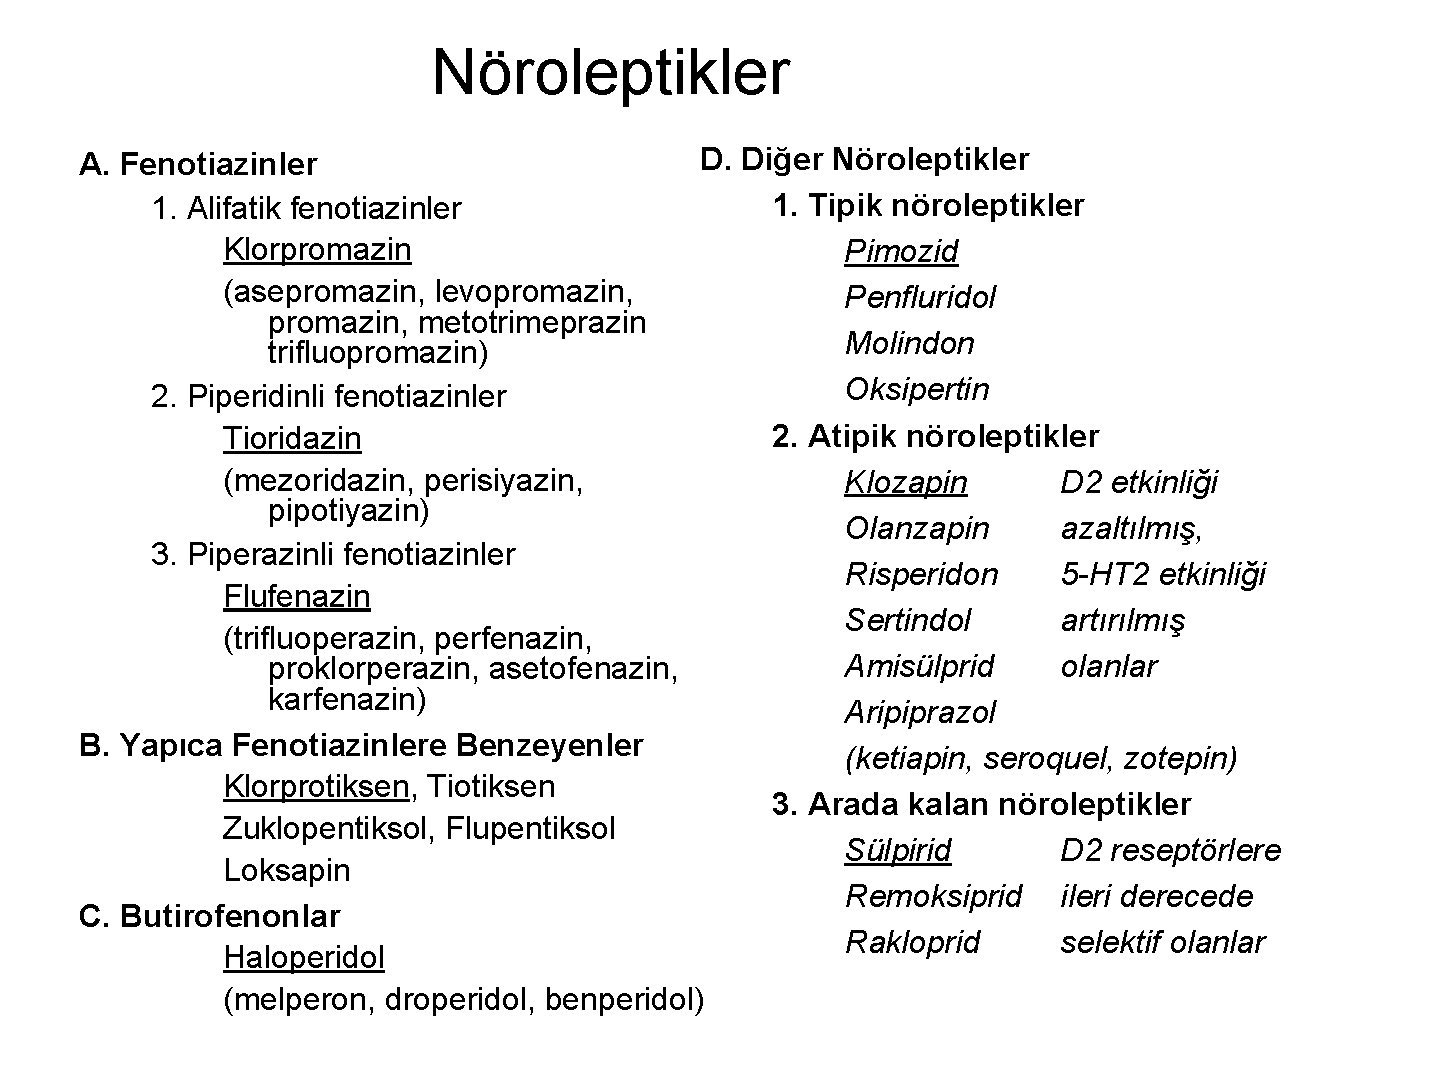 Nöroleptikler D. Diğer Nöroleptikler A. Fenotiazinler 1. Tipik nöroleptikler 1. Alifatik fenotiazinler Klorpromazin Pimozid